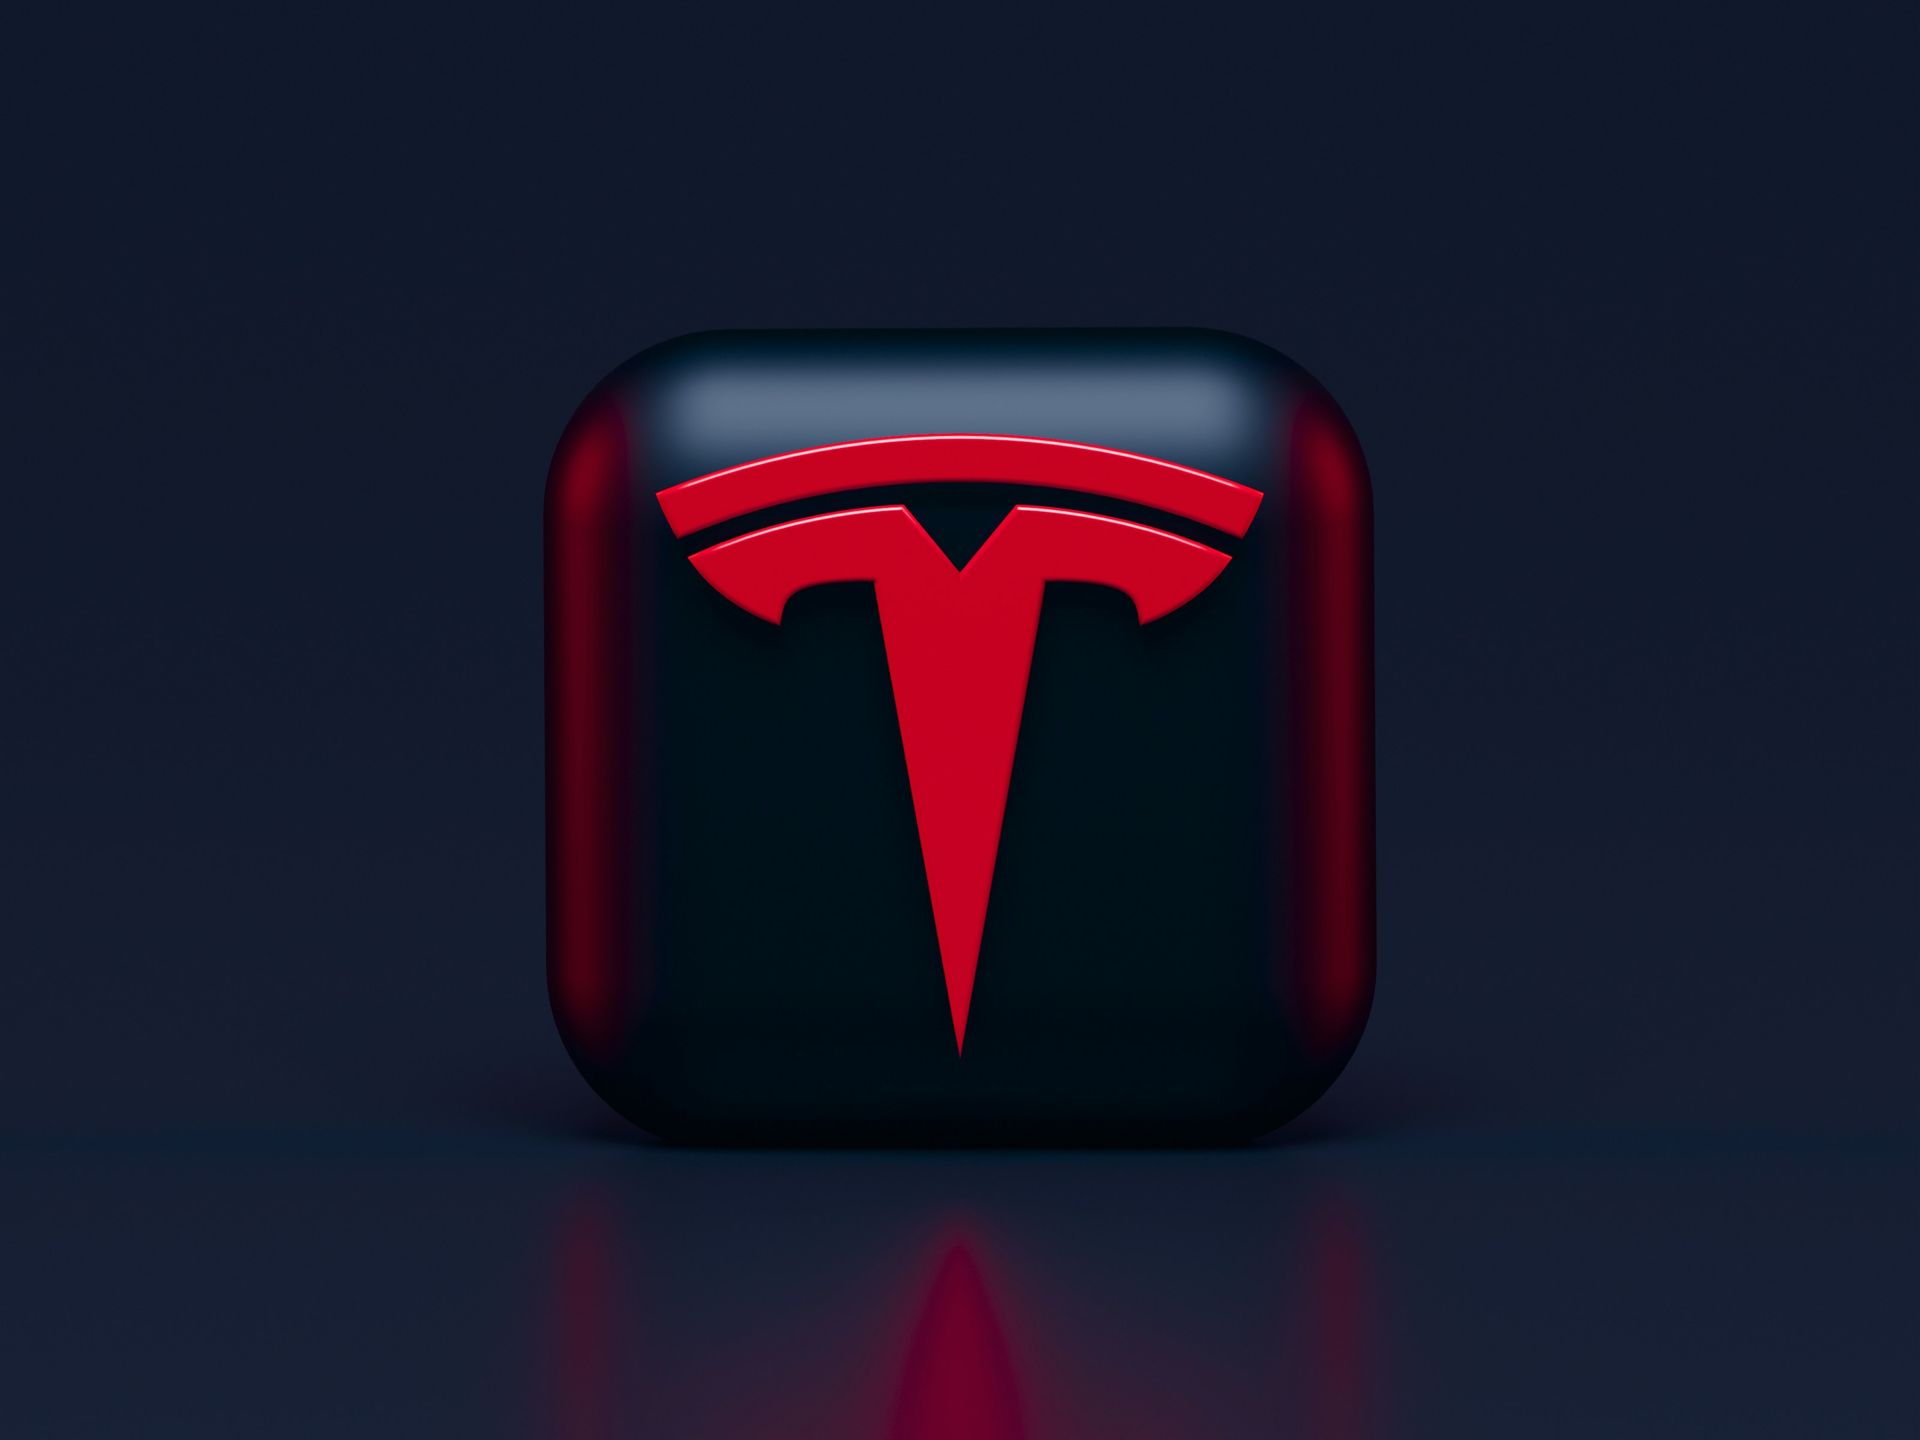 Tesla on the agenda with mass layoff news